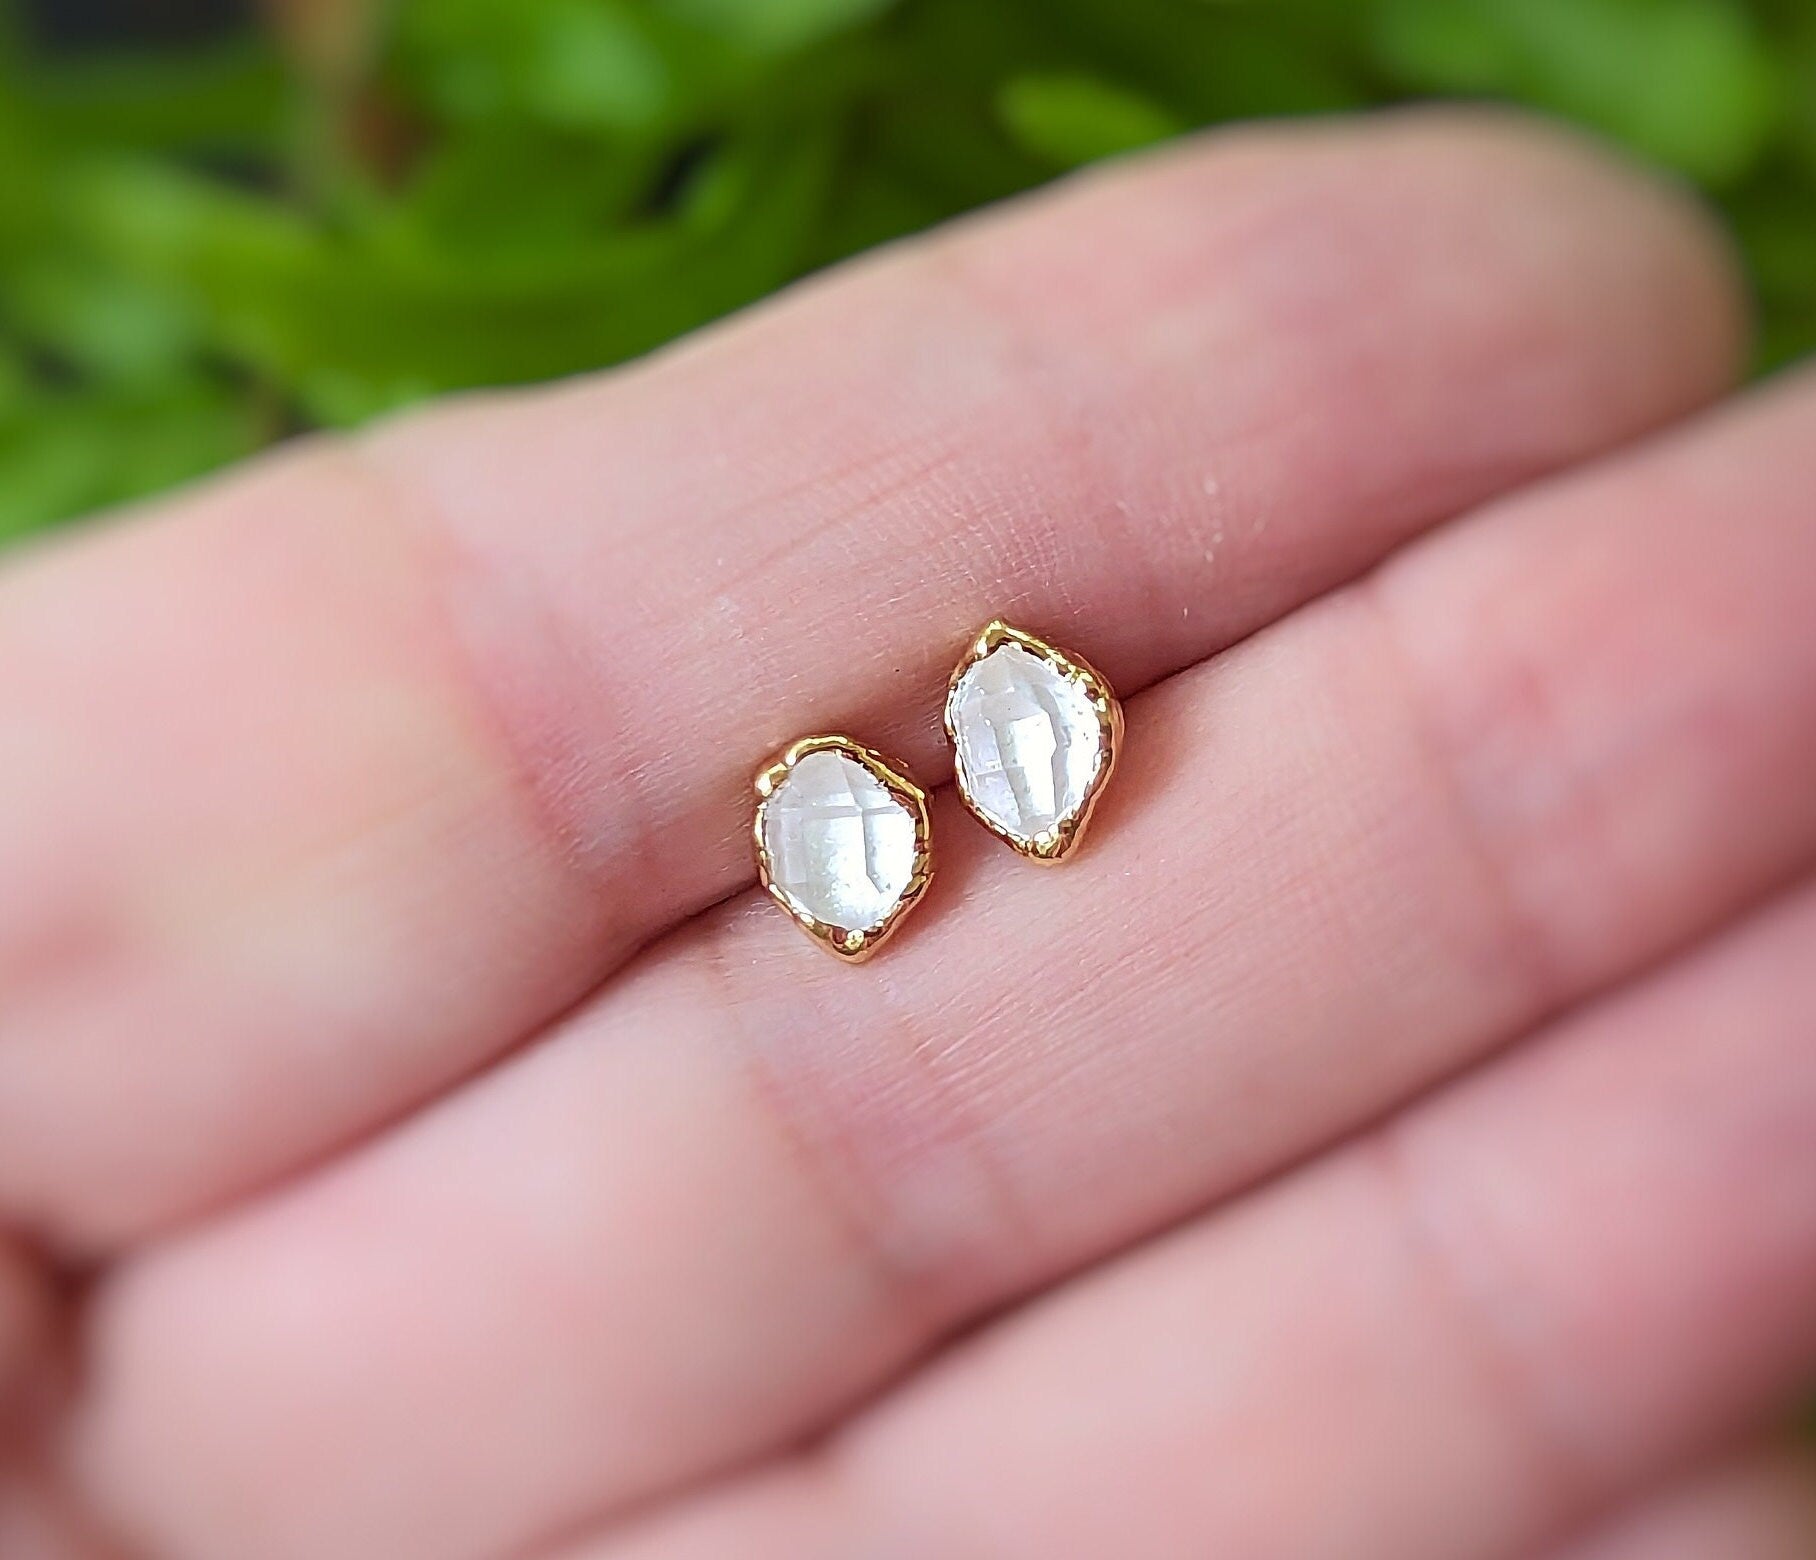 Herkimer diamond stud earrings in unique 18k Gold setting